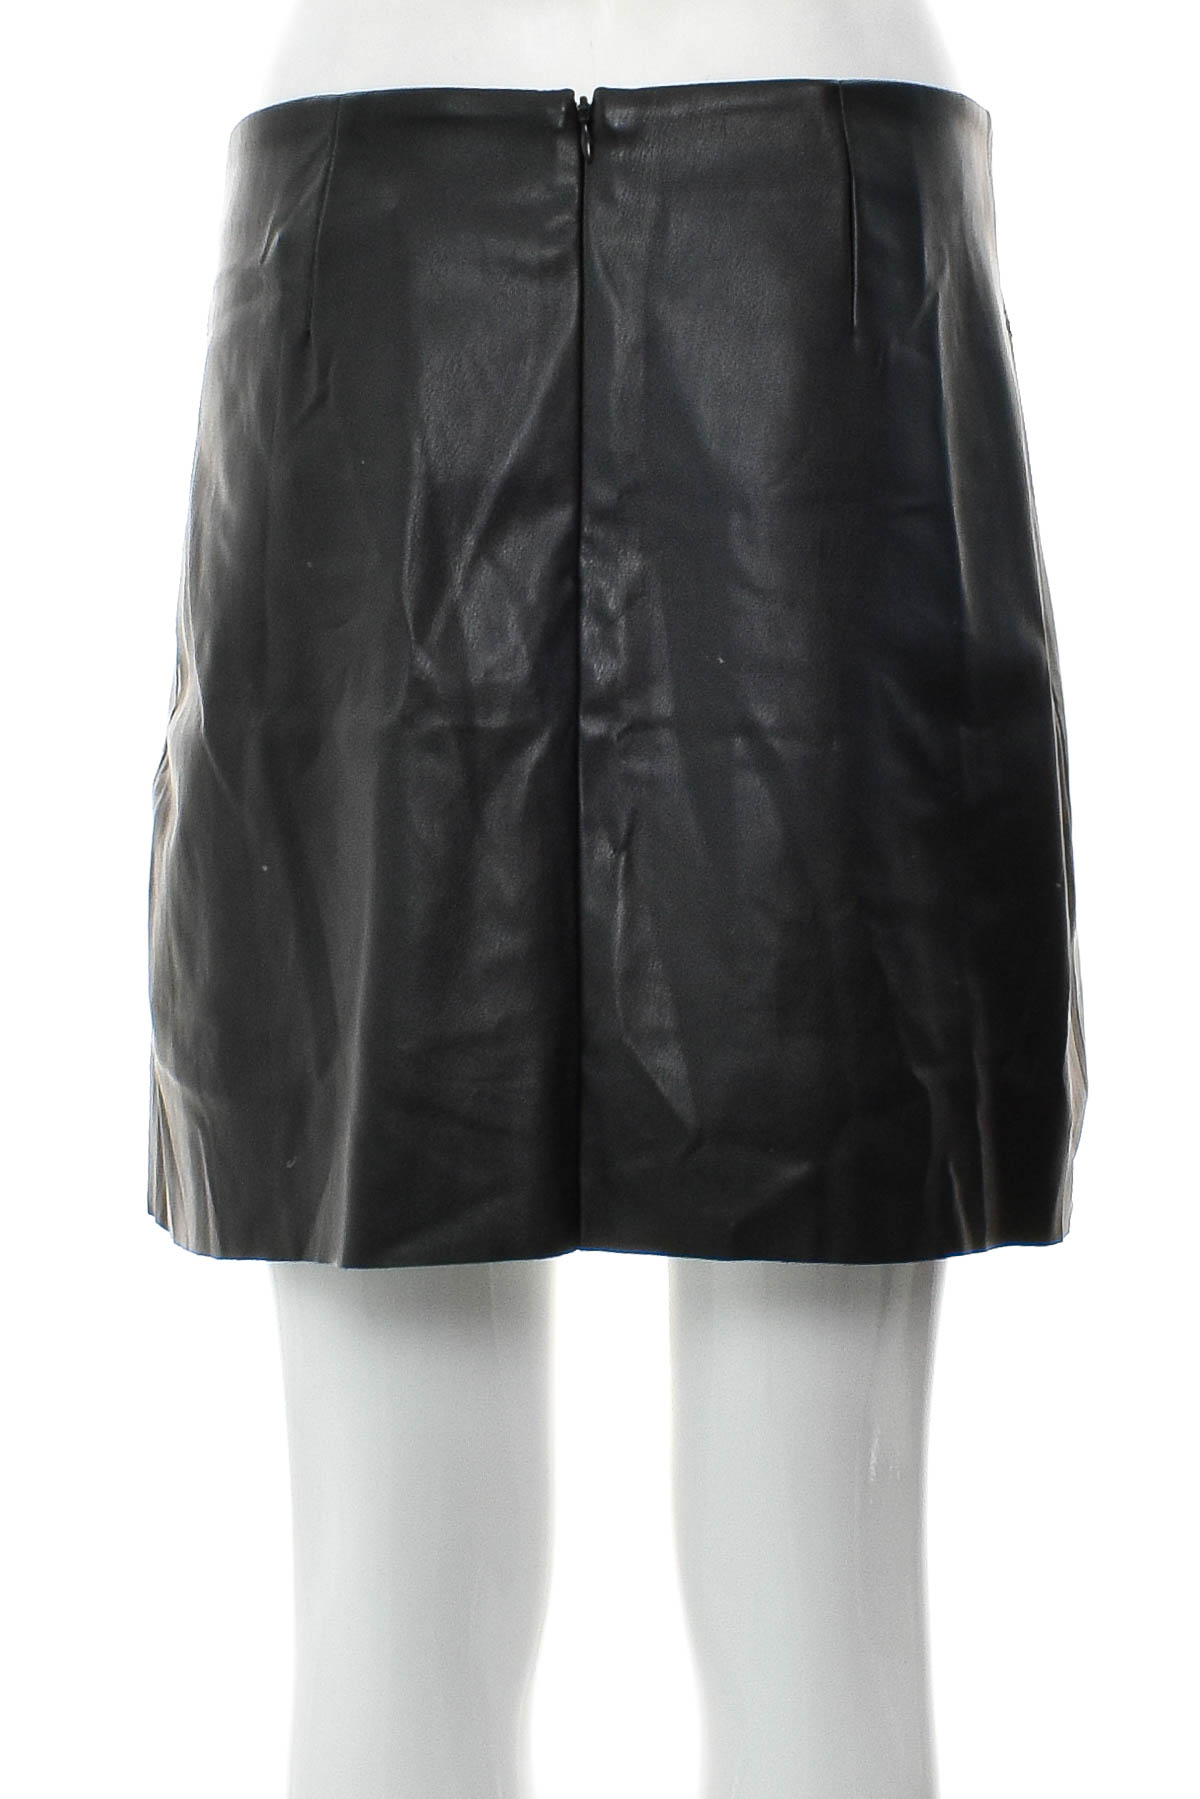 Leather skirt - Pimkie - 1